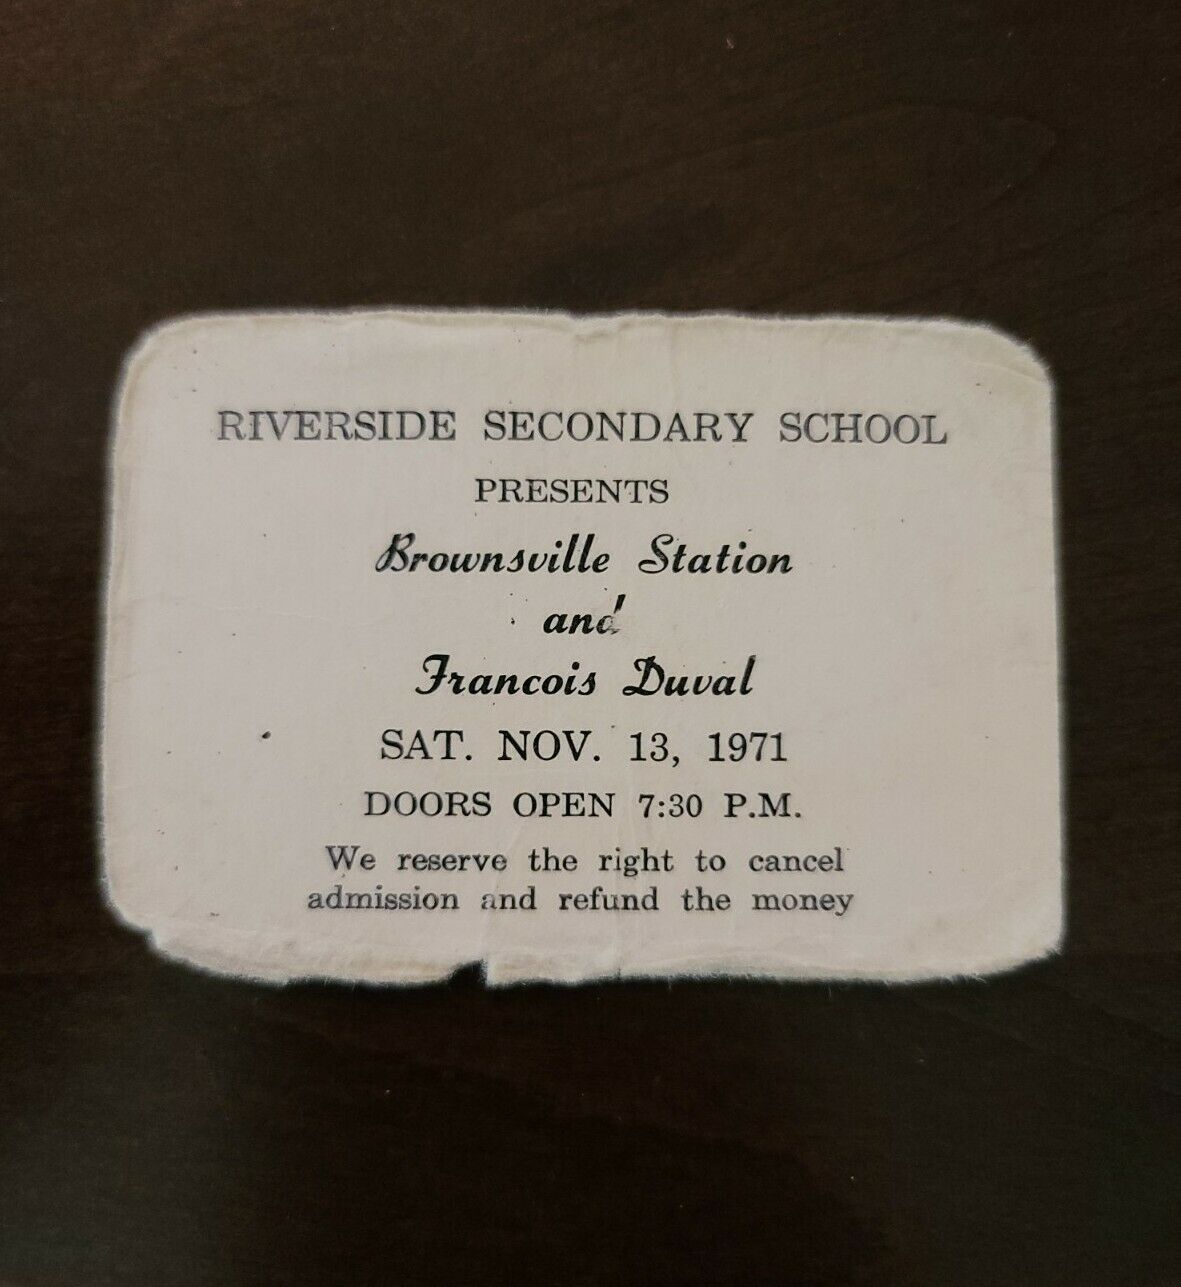 Brownsville Station 1971 Riverside Secondary School Original Concert Ticket Stub